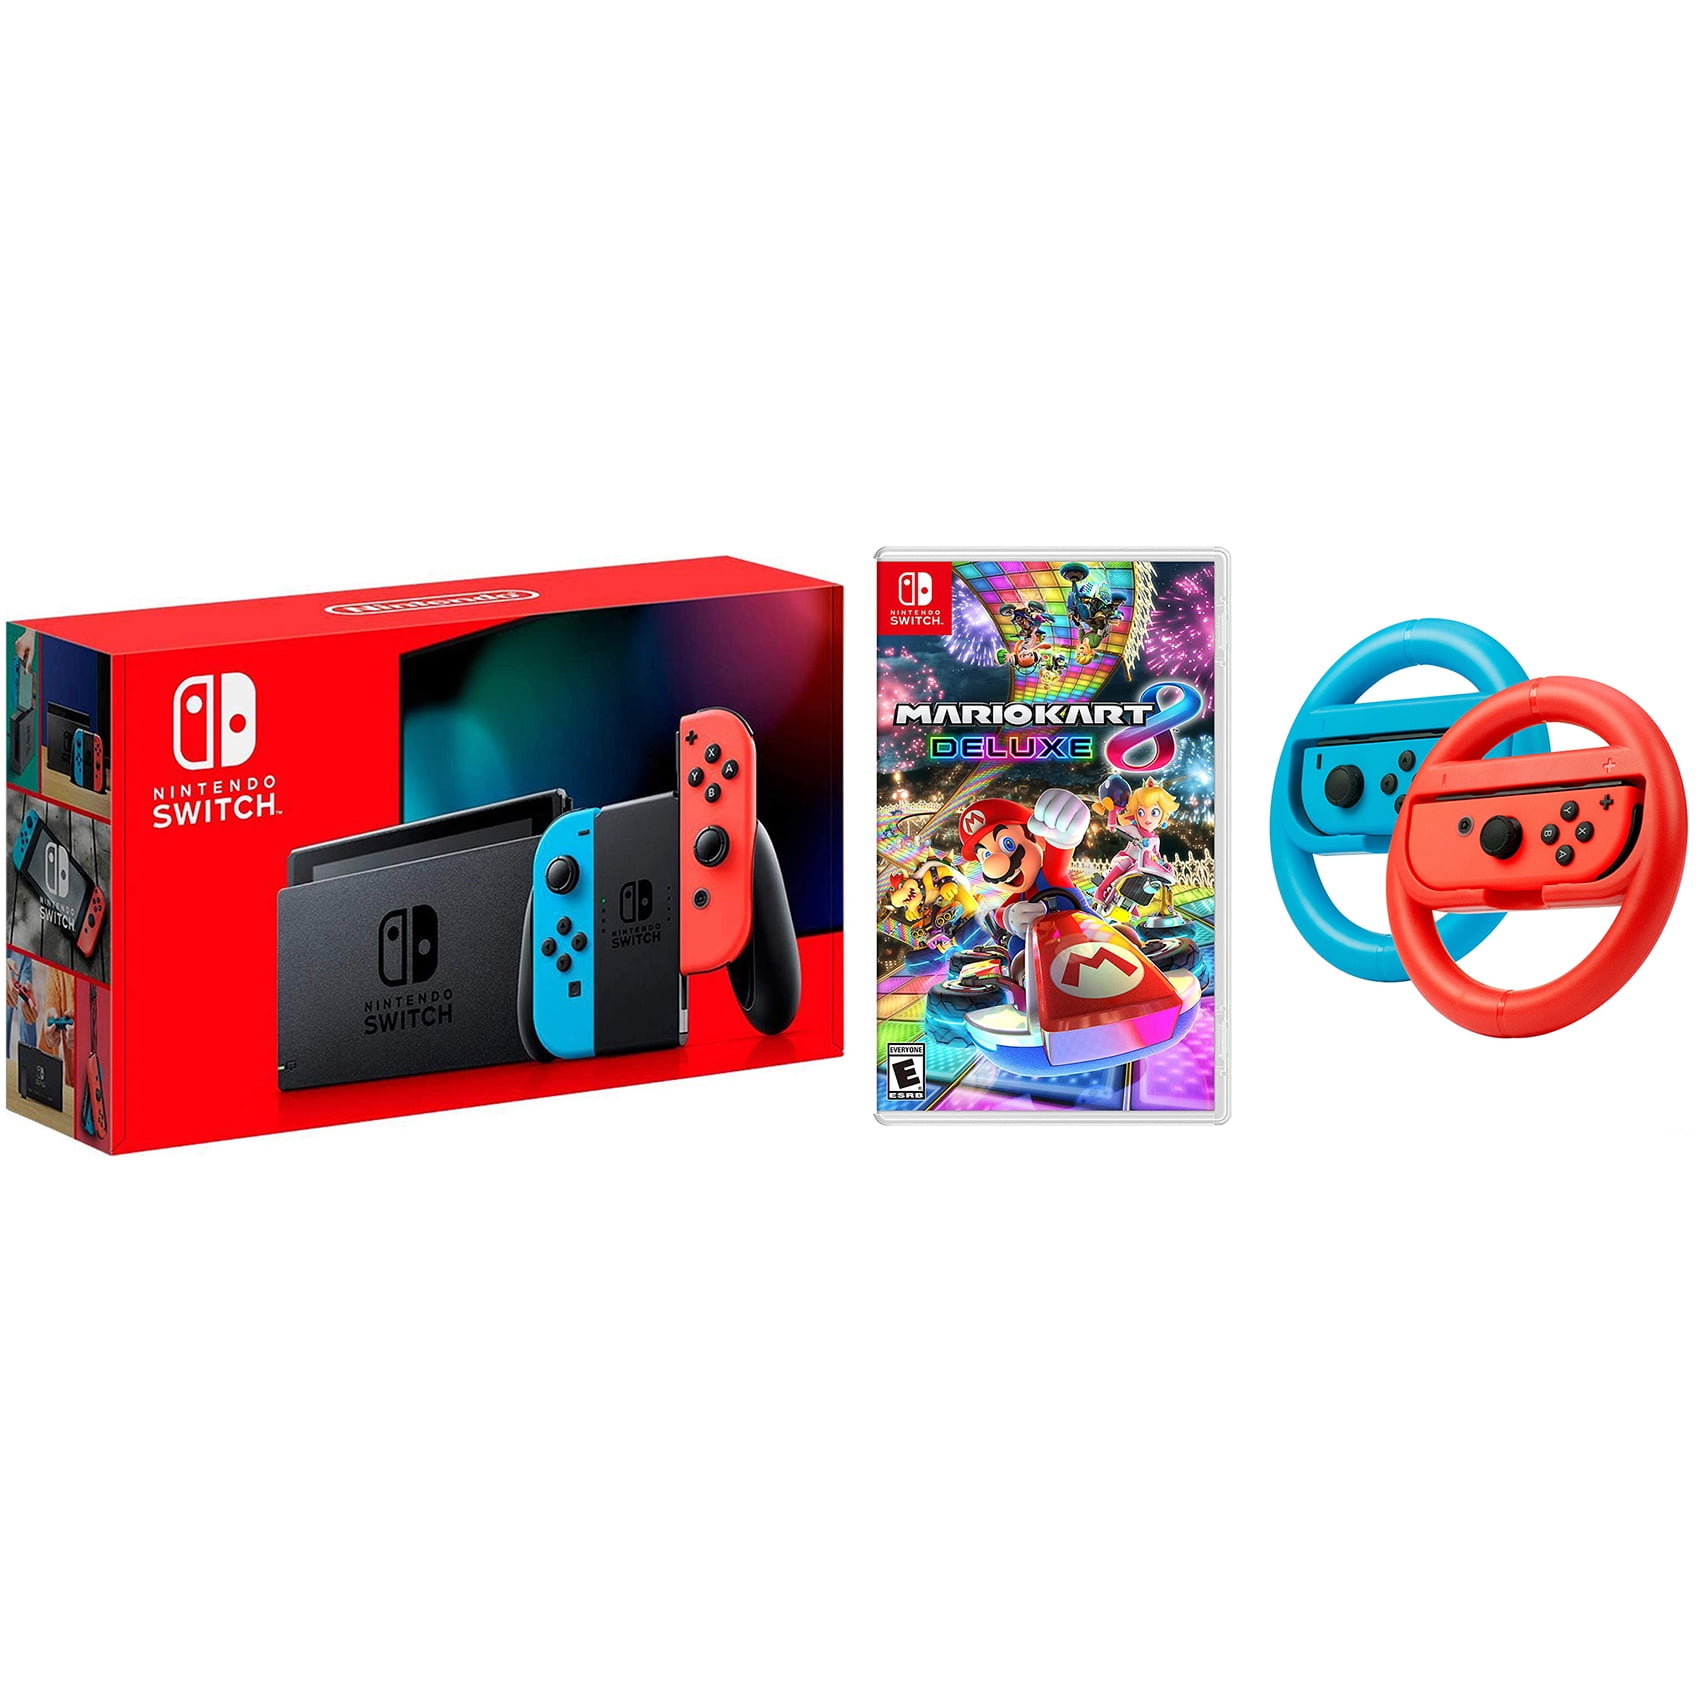 Nintendo Switch Super Mario Kart 8 Deluxe Bundle: Red and Blue Joy